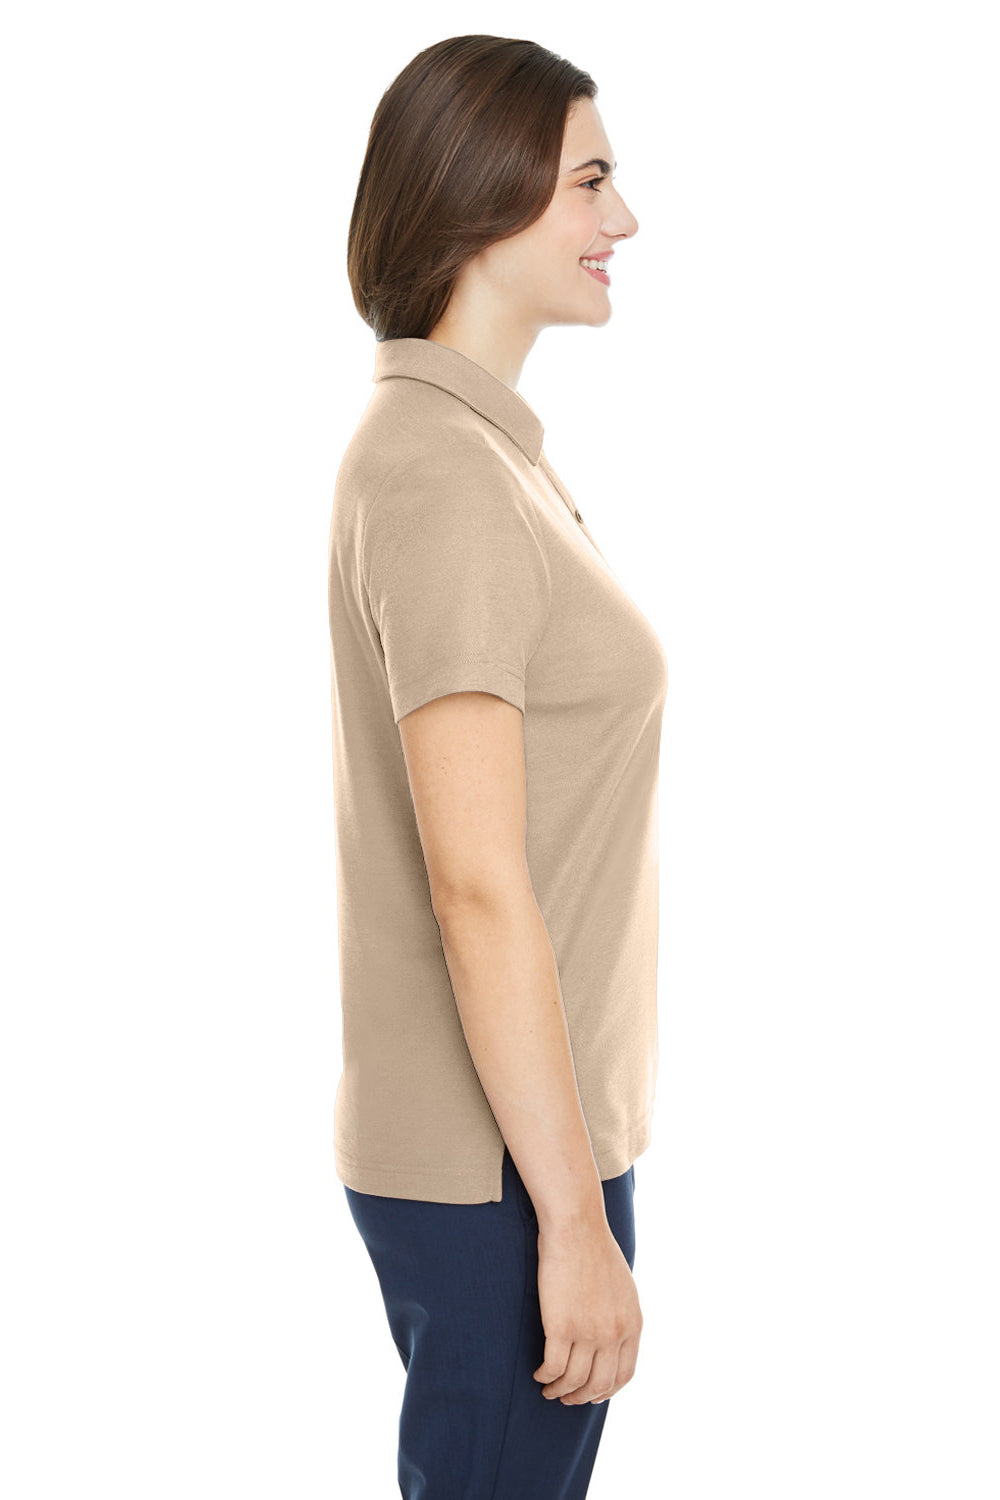 Core 365 CE112W Womens Fusion ChromaSoft Performance Moisture Wicking Pique Short Sleeve Polo Shirt Stone Side